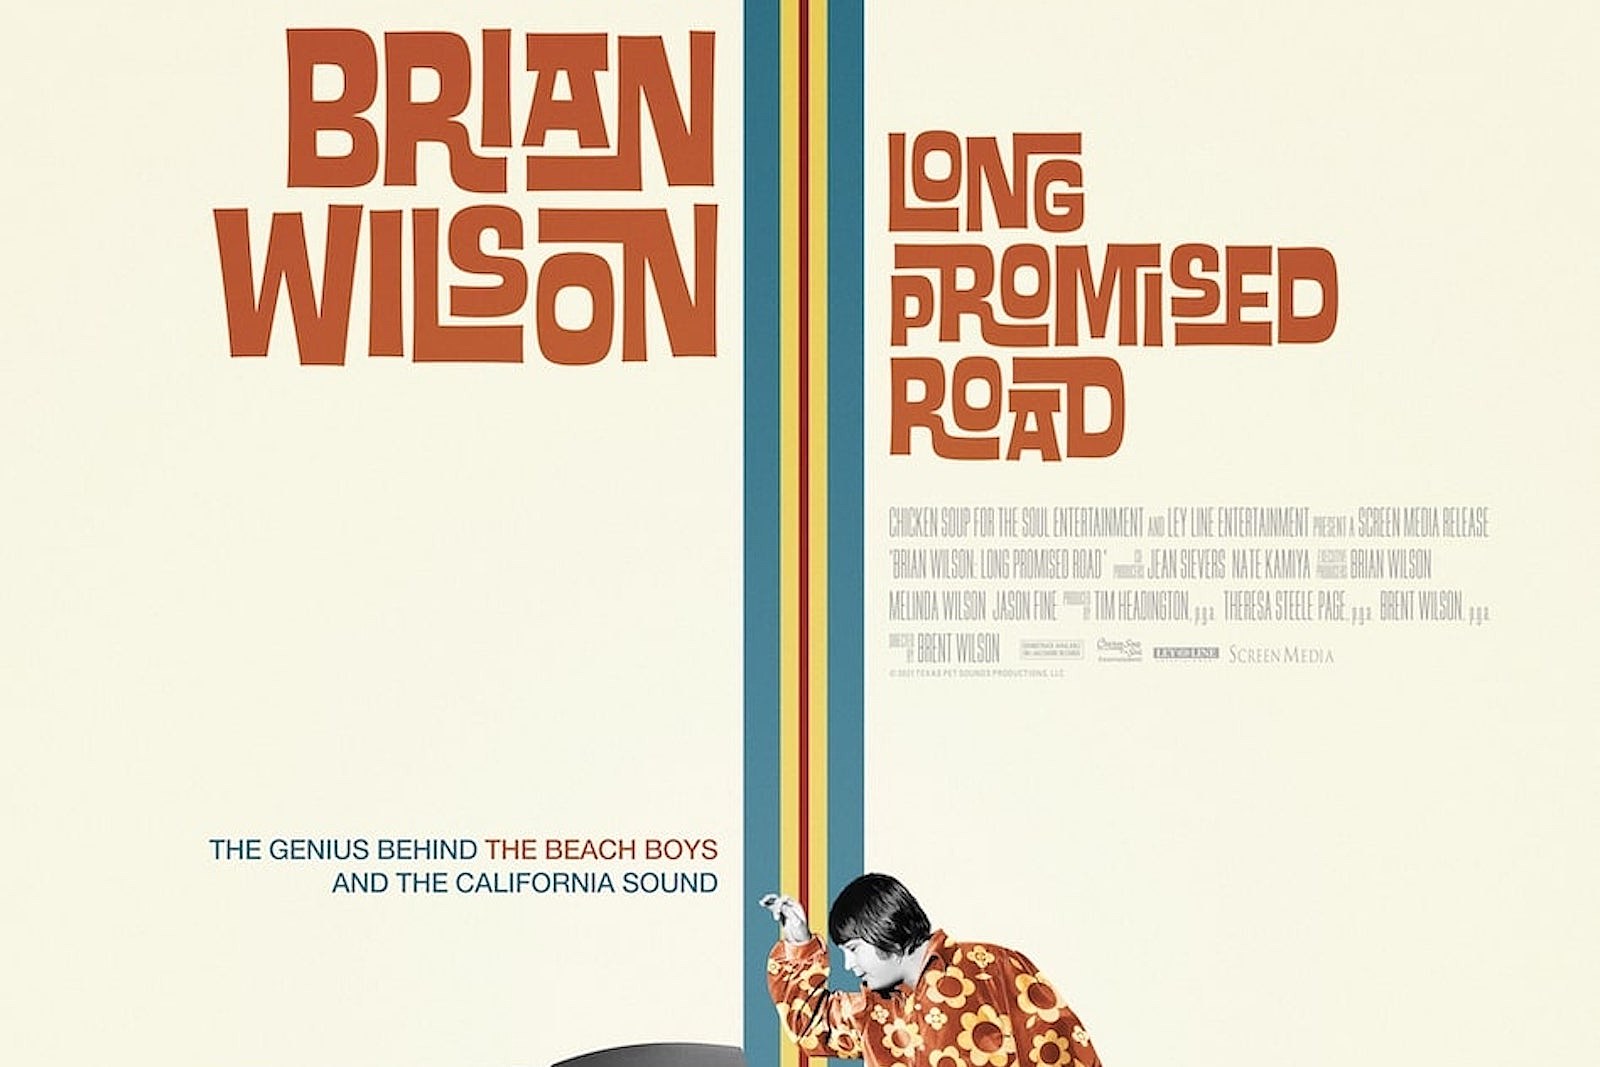 Brian Wilson Film Director on Working to ‘Demystify’ Brian